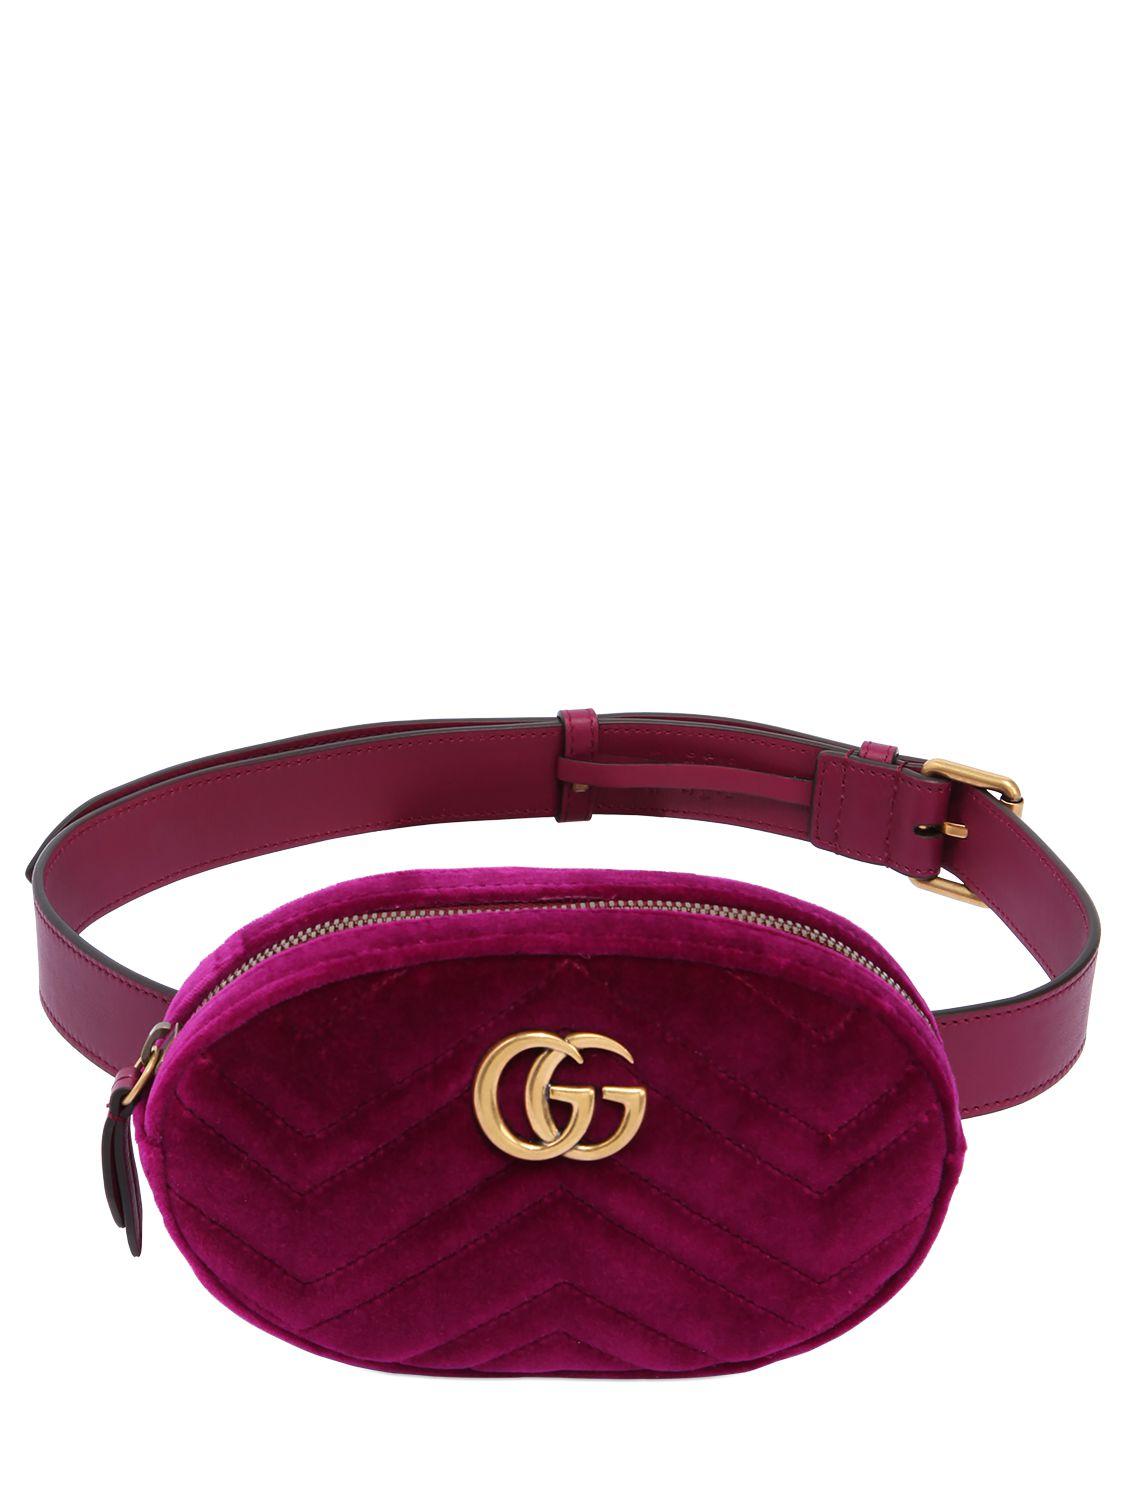 Gucci Gg Marmont 2.0 Velvet Belt Pack in Purple - Lyst